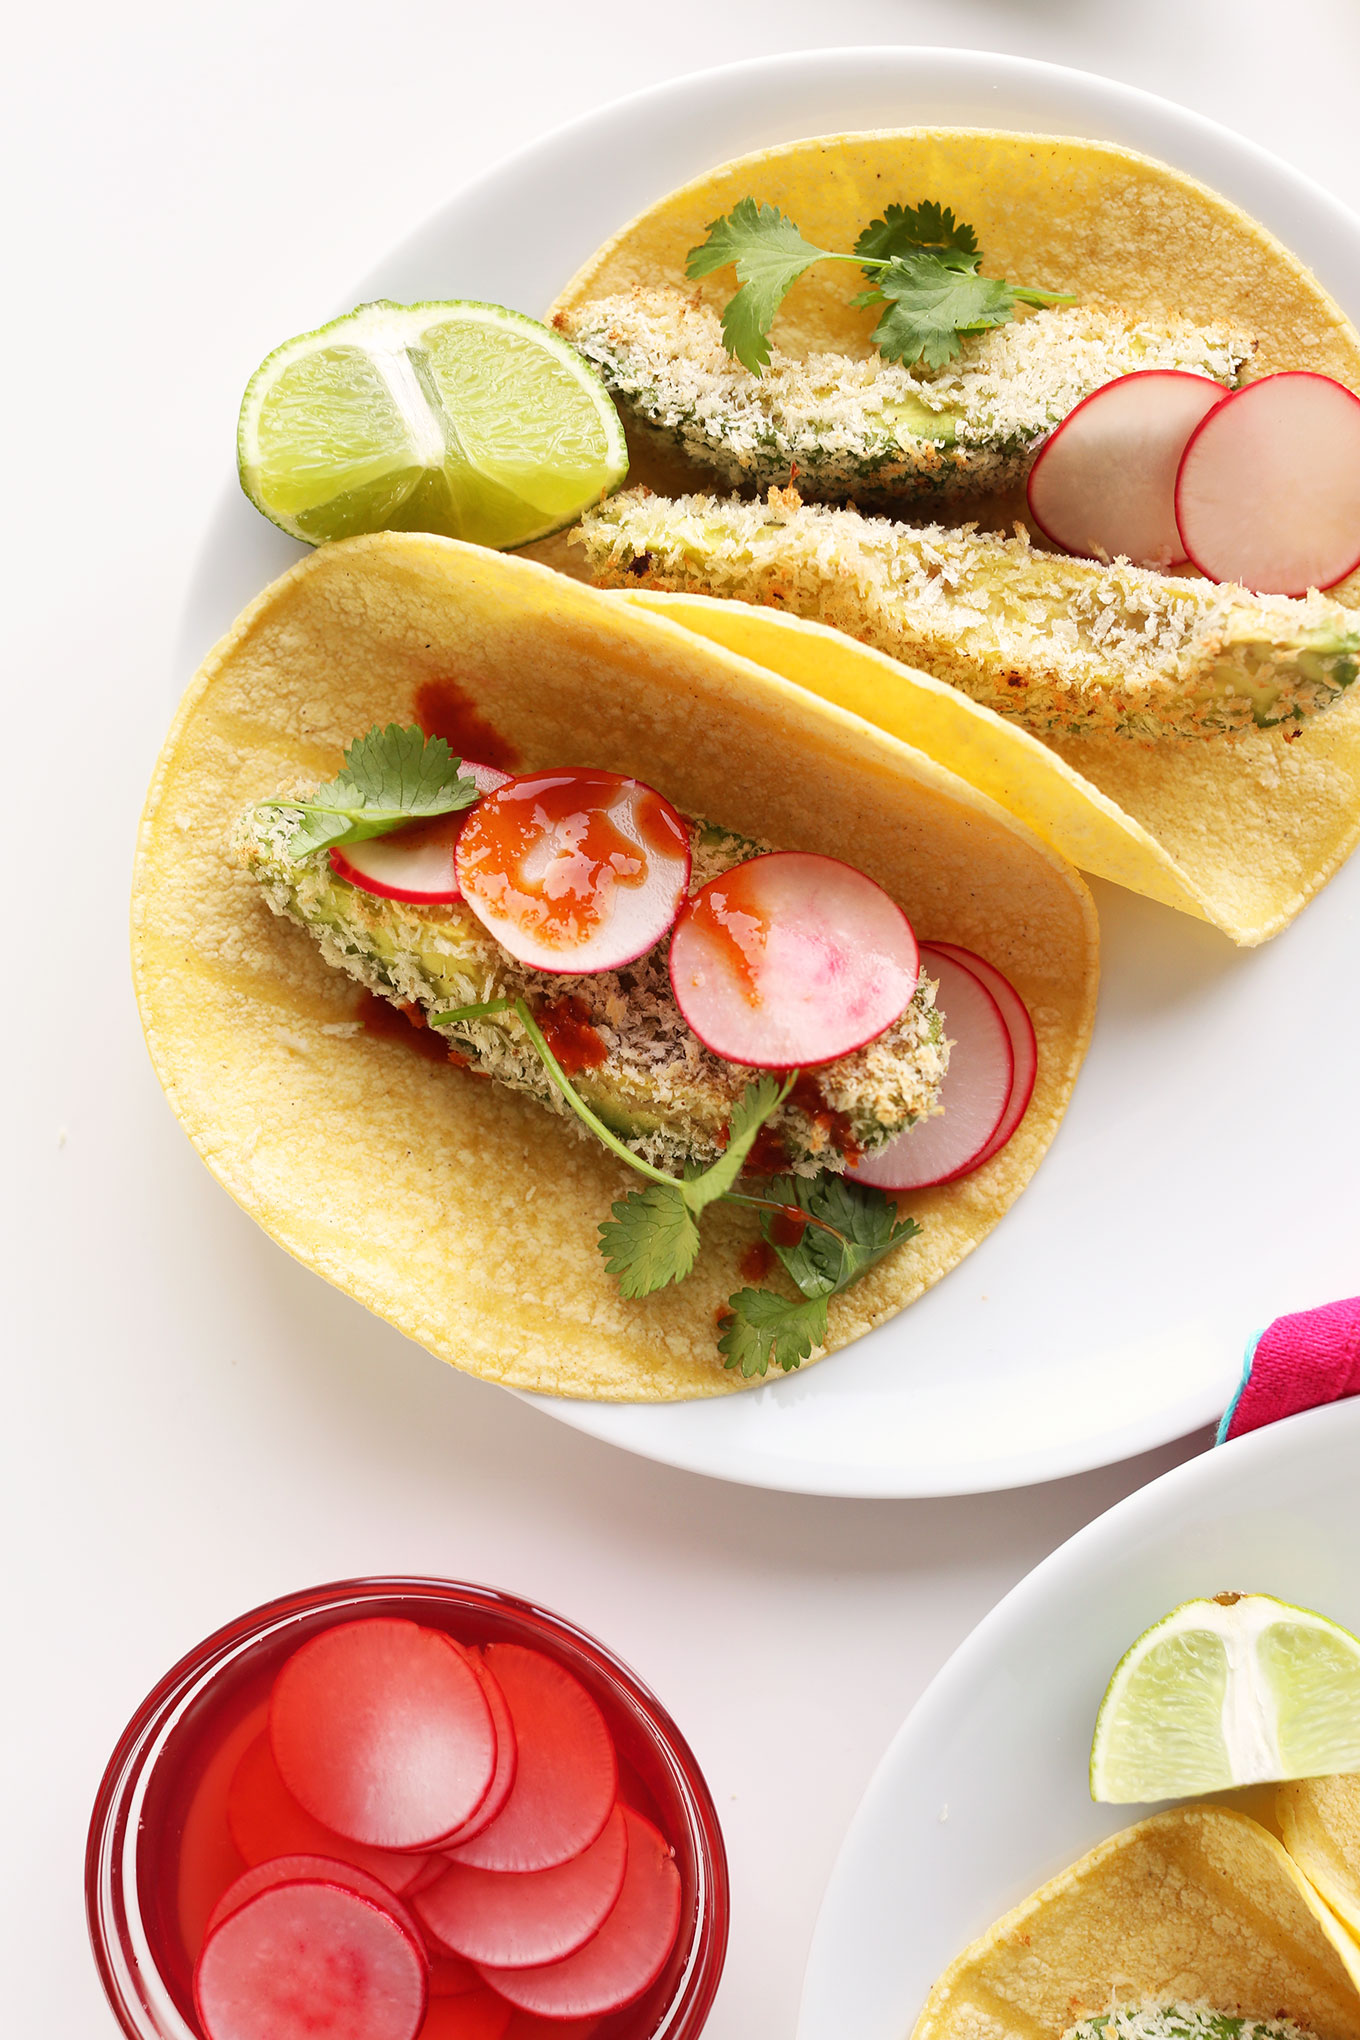 EASY-30-minute-Panko-Baked-Avocado-Tacos-with-pickled-radish-and-hto-sauce-vegan